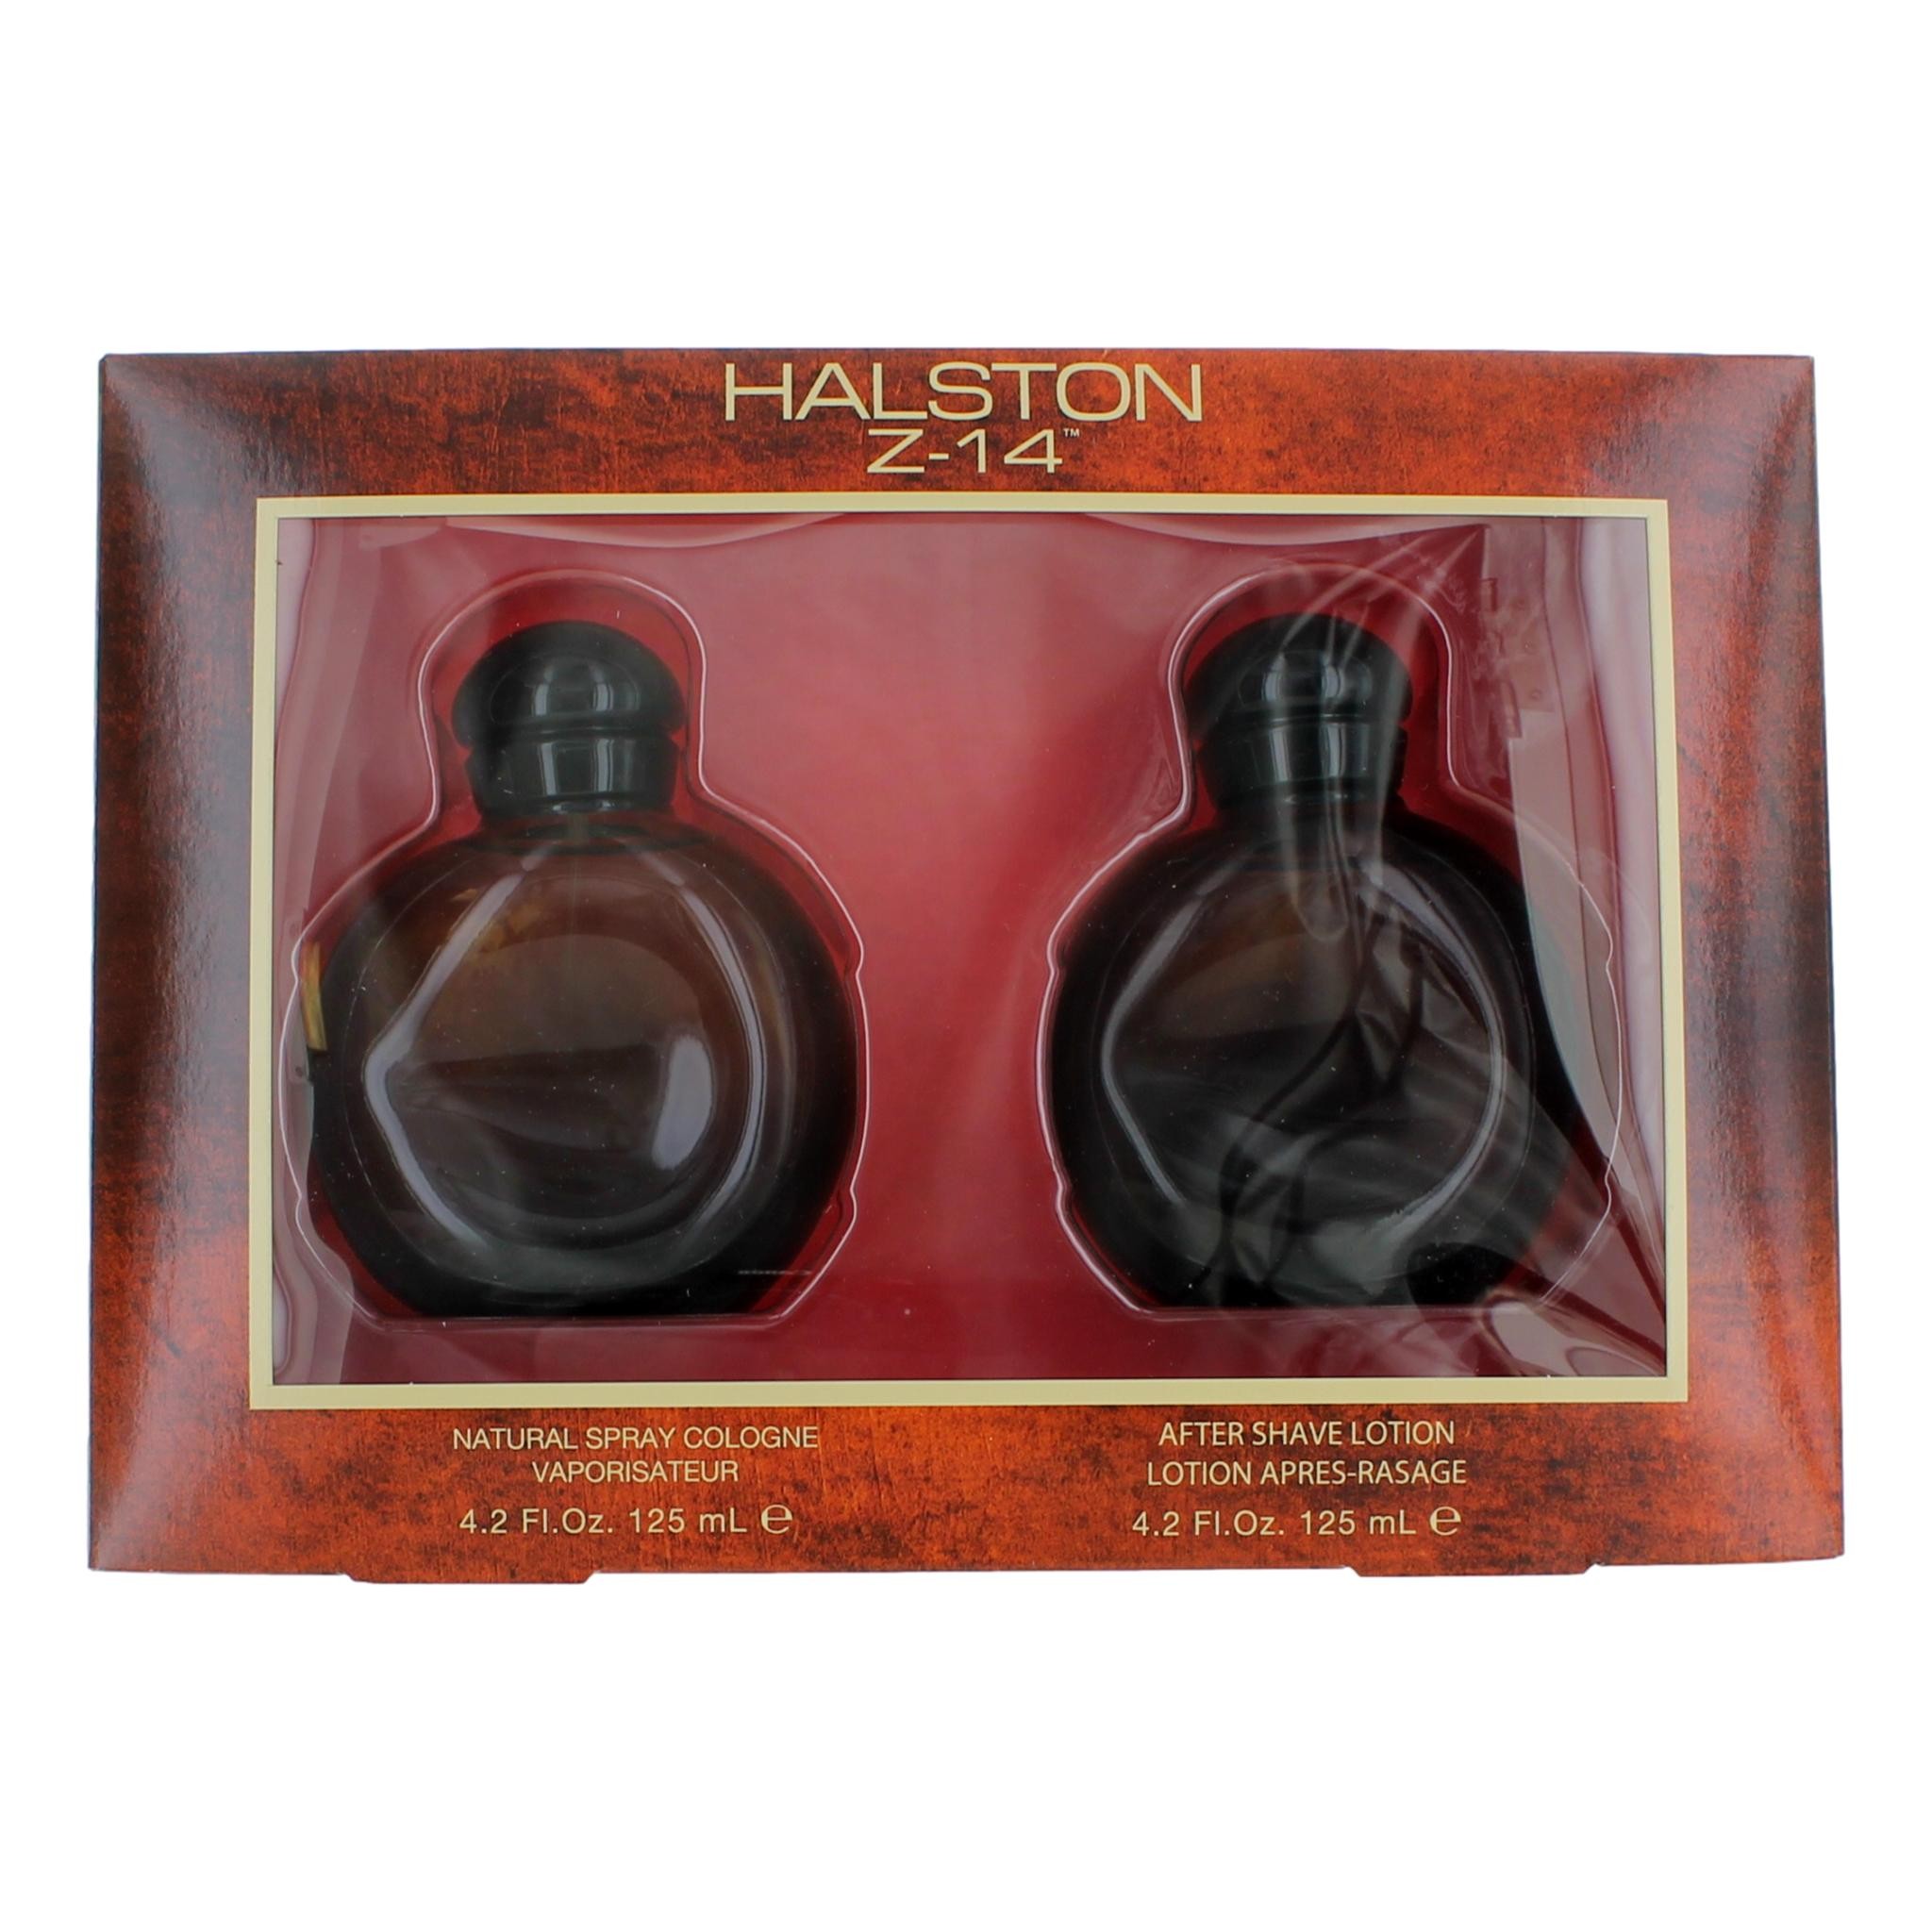 Halston Z-14 by Halston 2 Piece Gift Set for Men